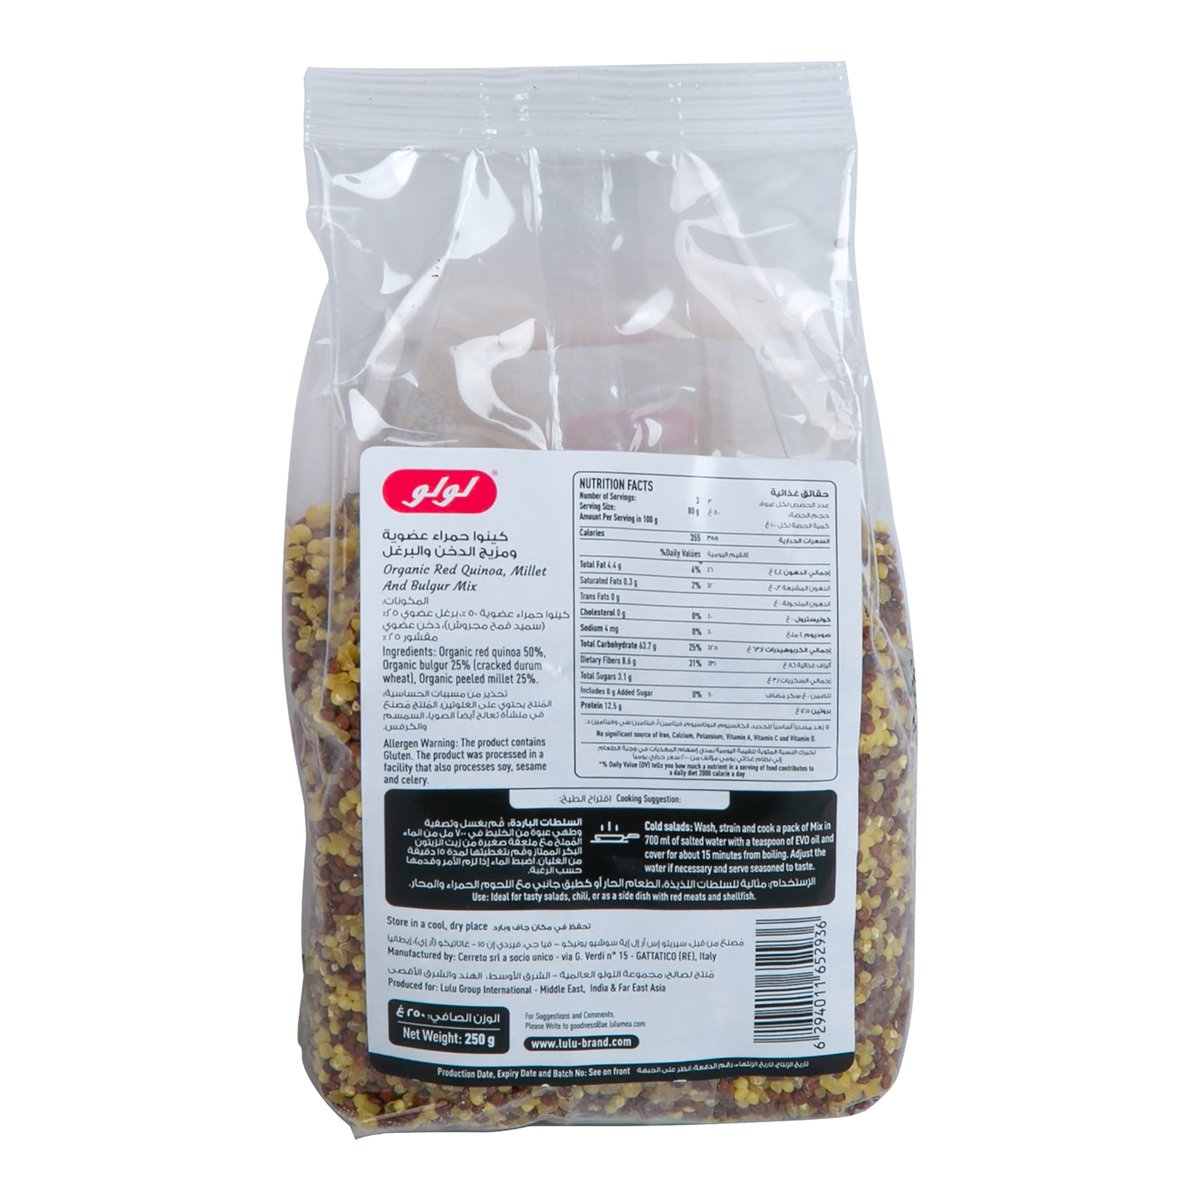 LuLu Organic Red Quinoa Millet And Bulgur Mix 250 g